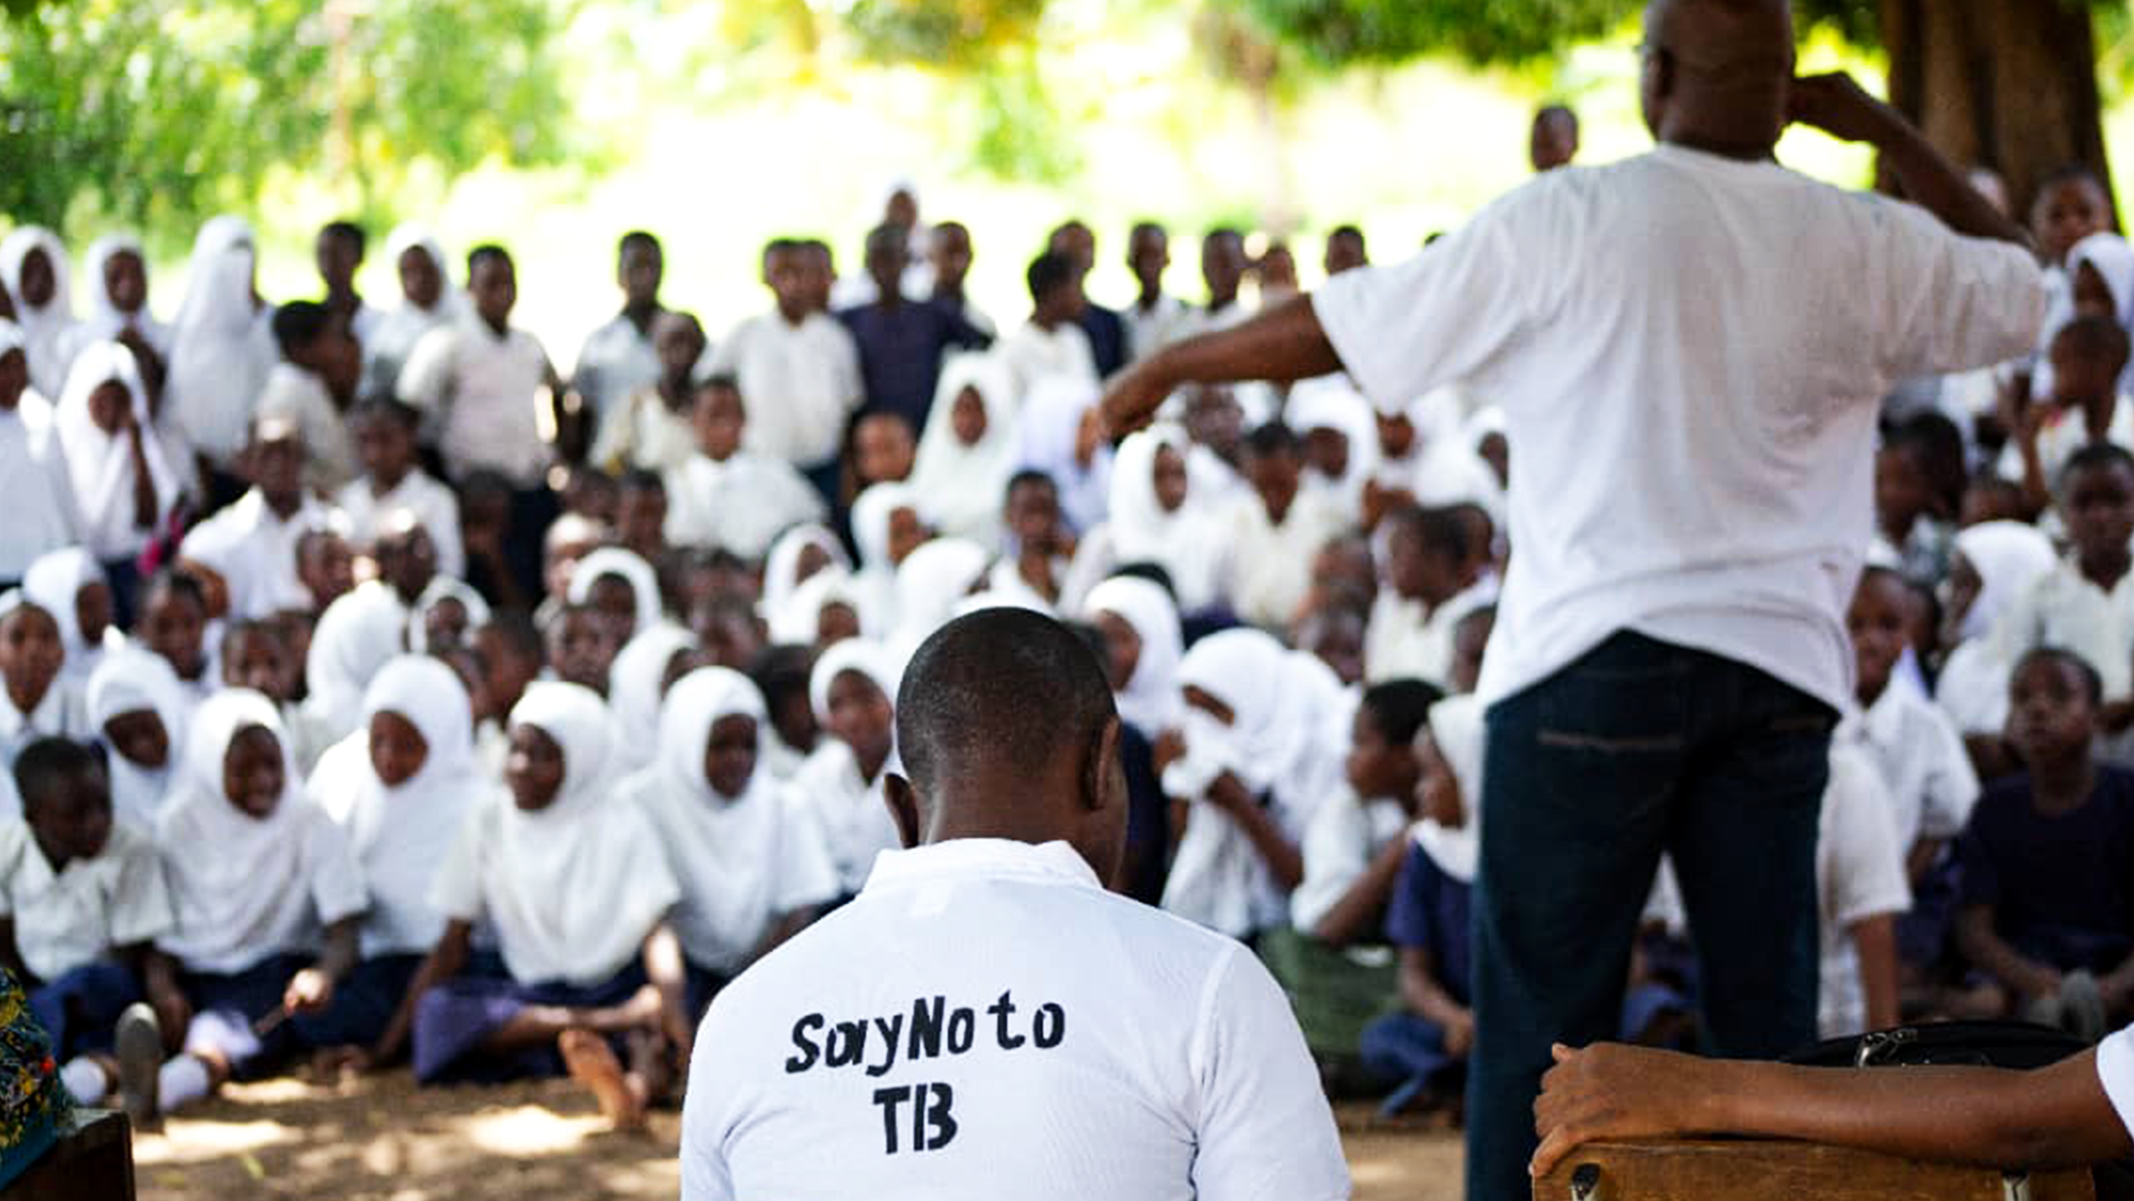 TB Alliance Community Engagement World TB Day 2019